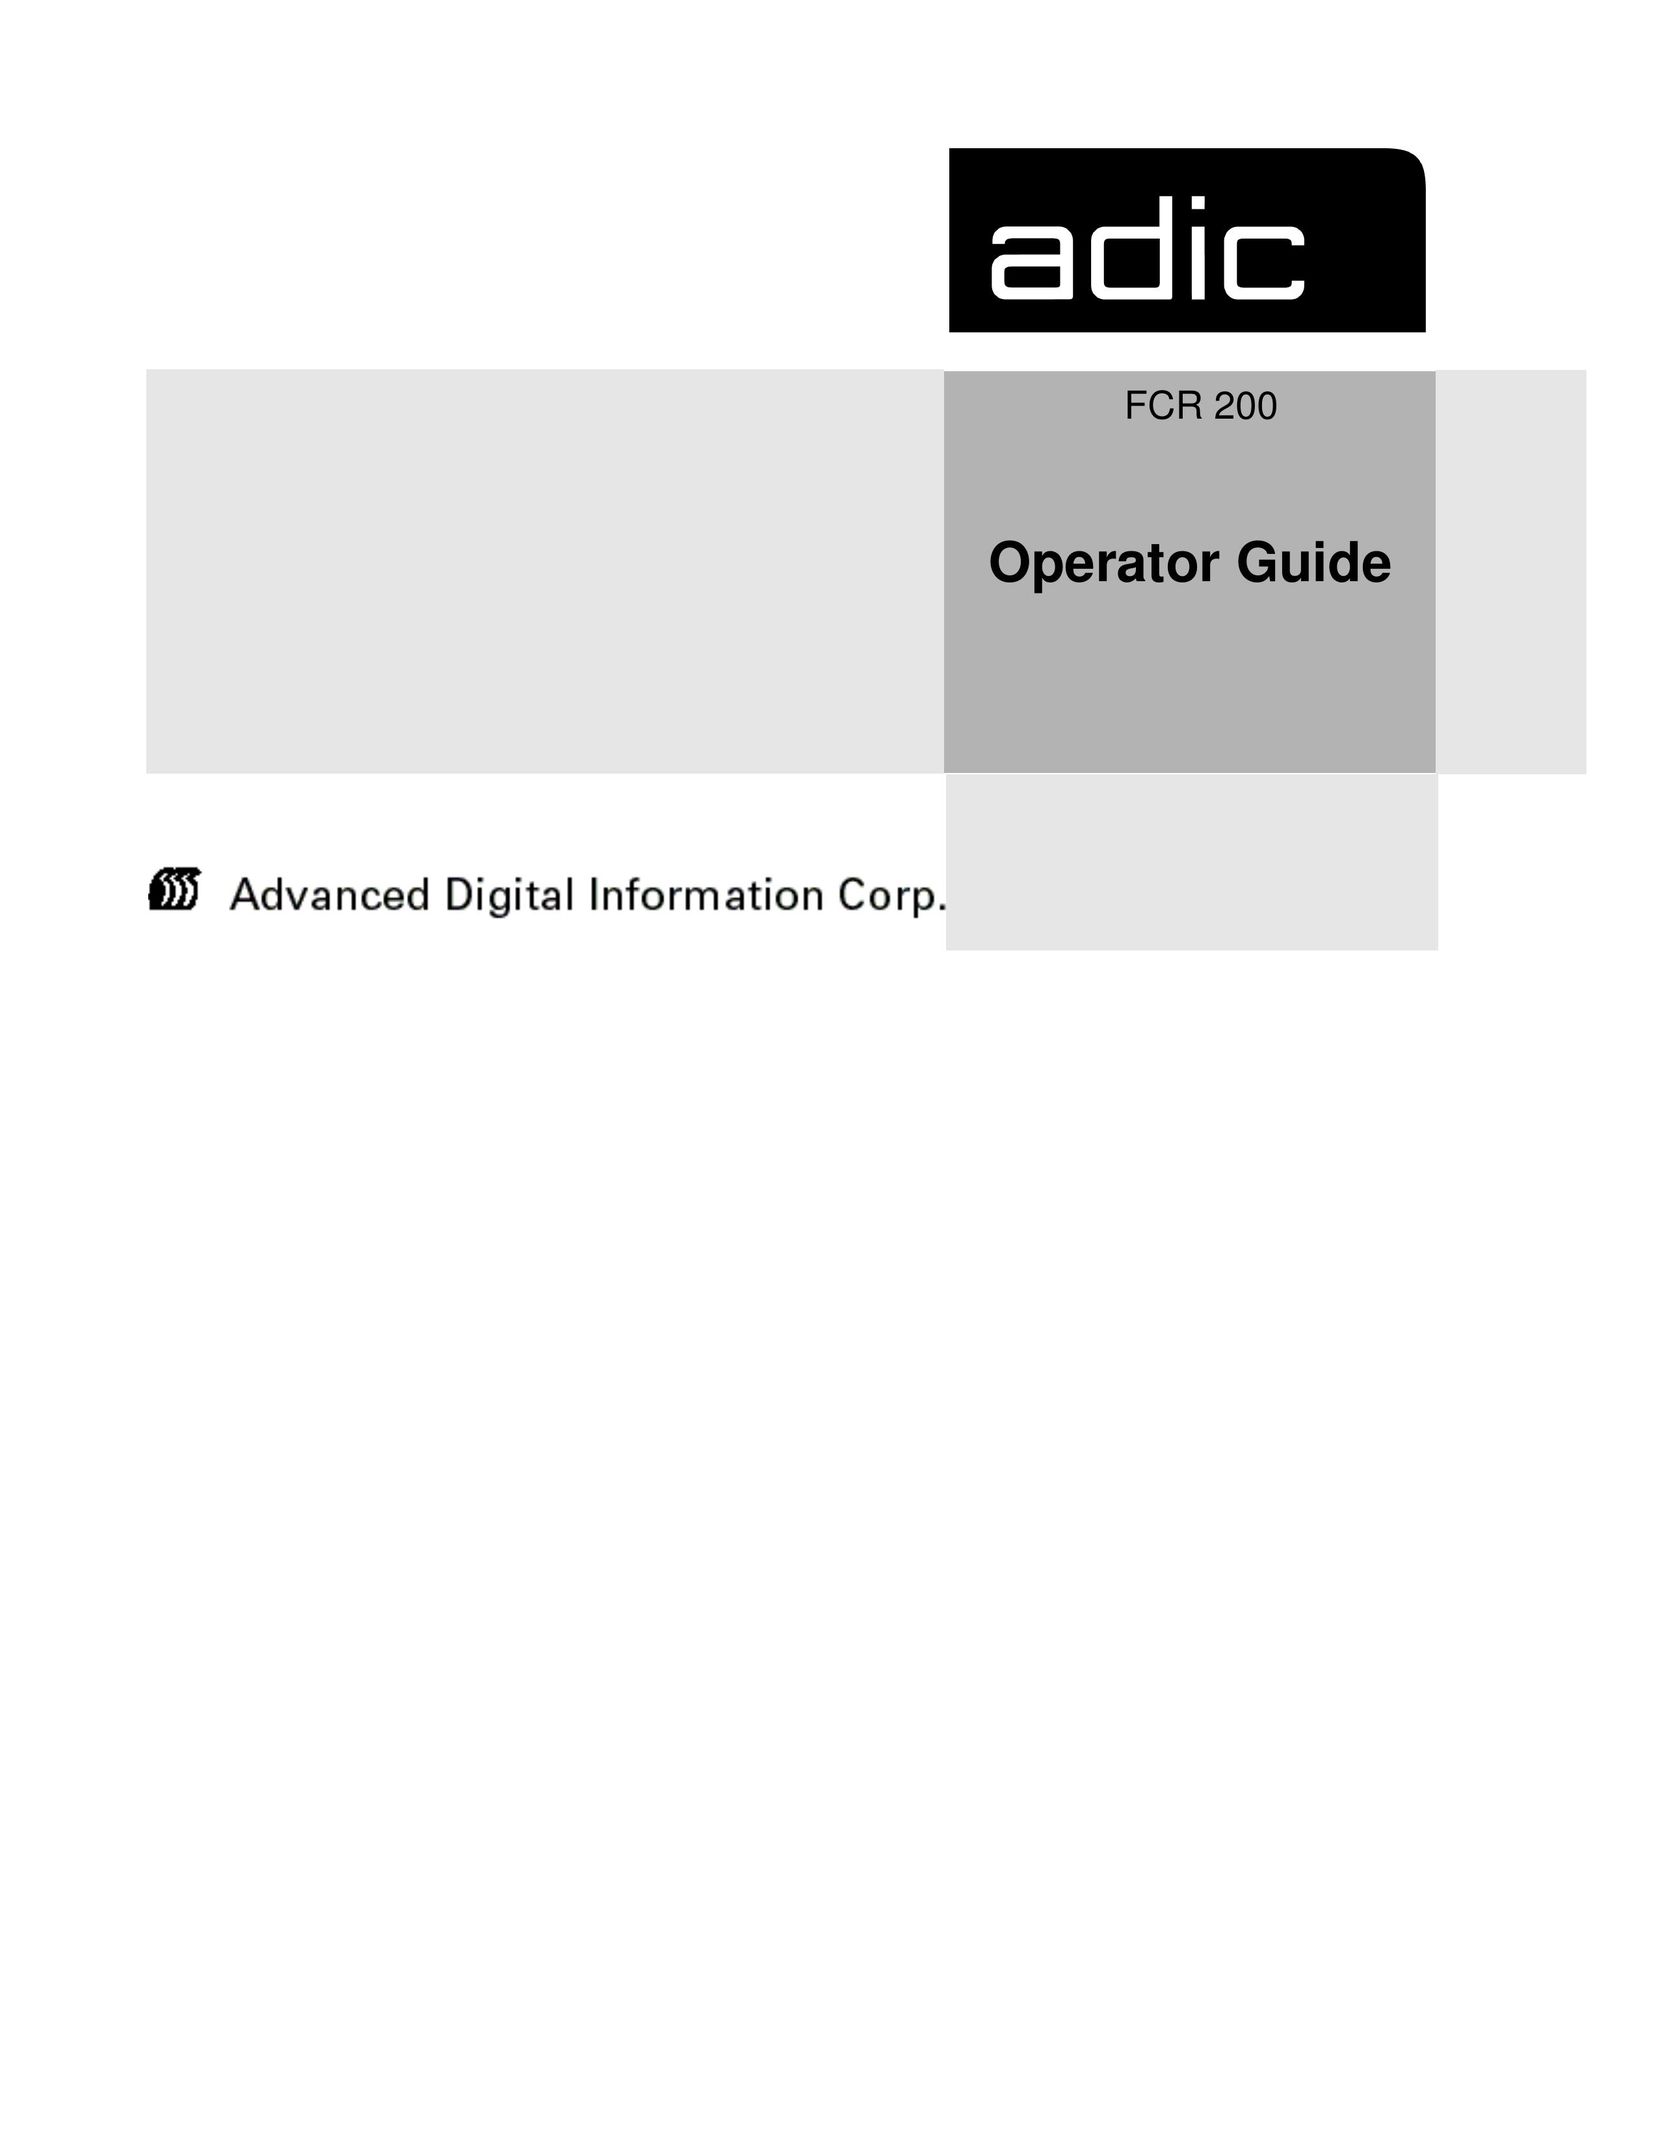 ADIC FCR 200 Network Router User Manual